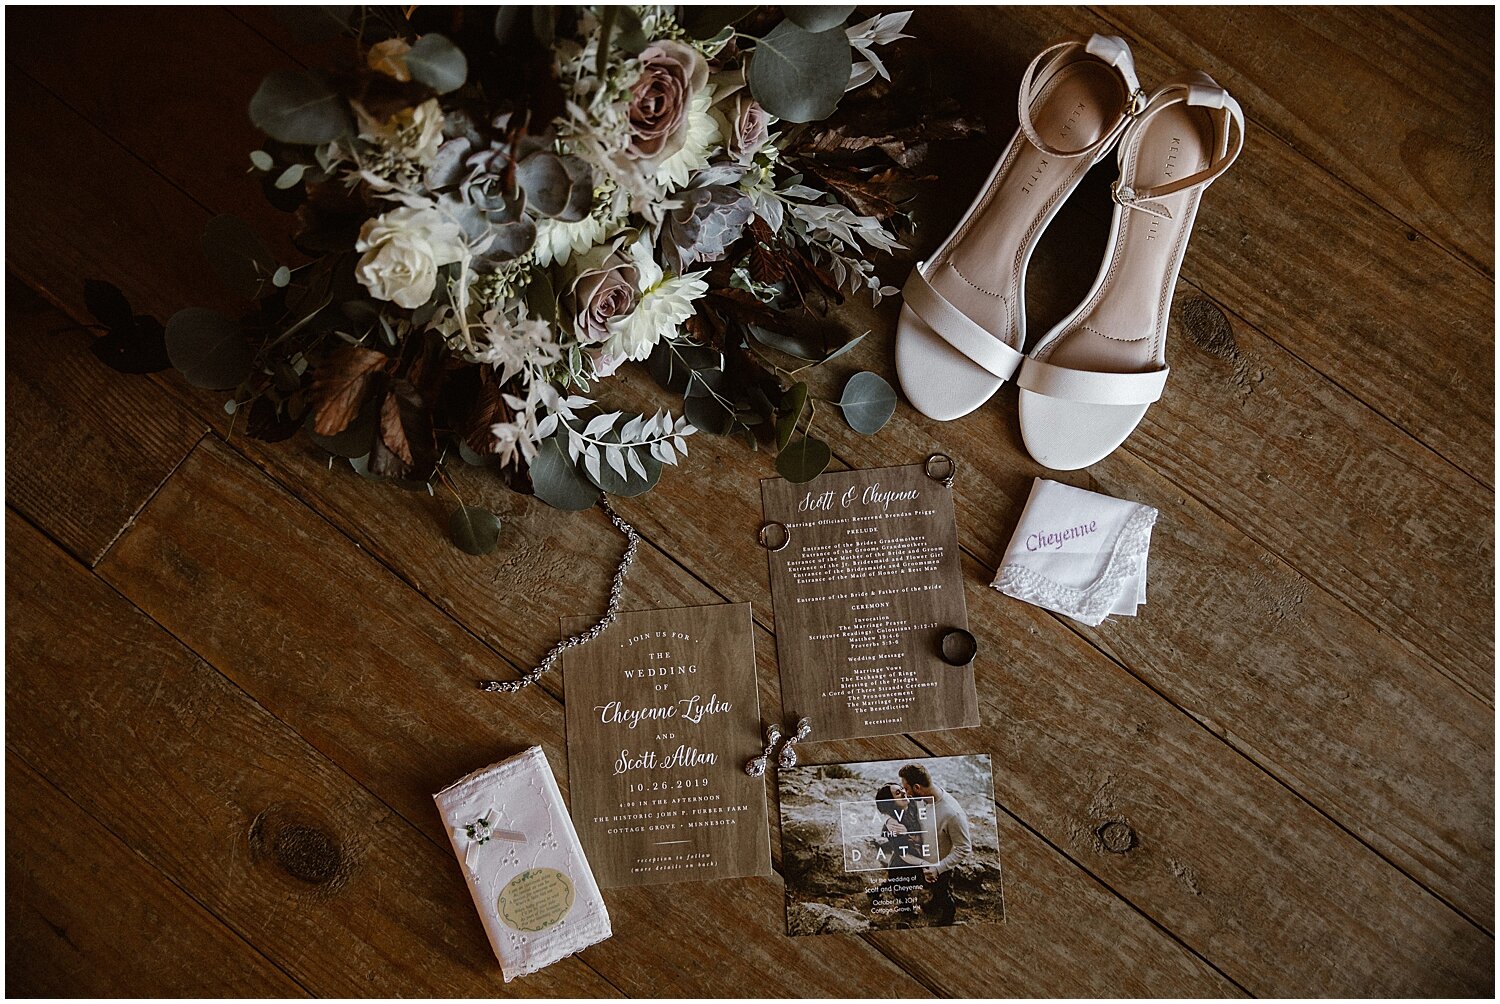  Wedding accessories and wedding invitation layout 